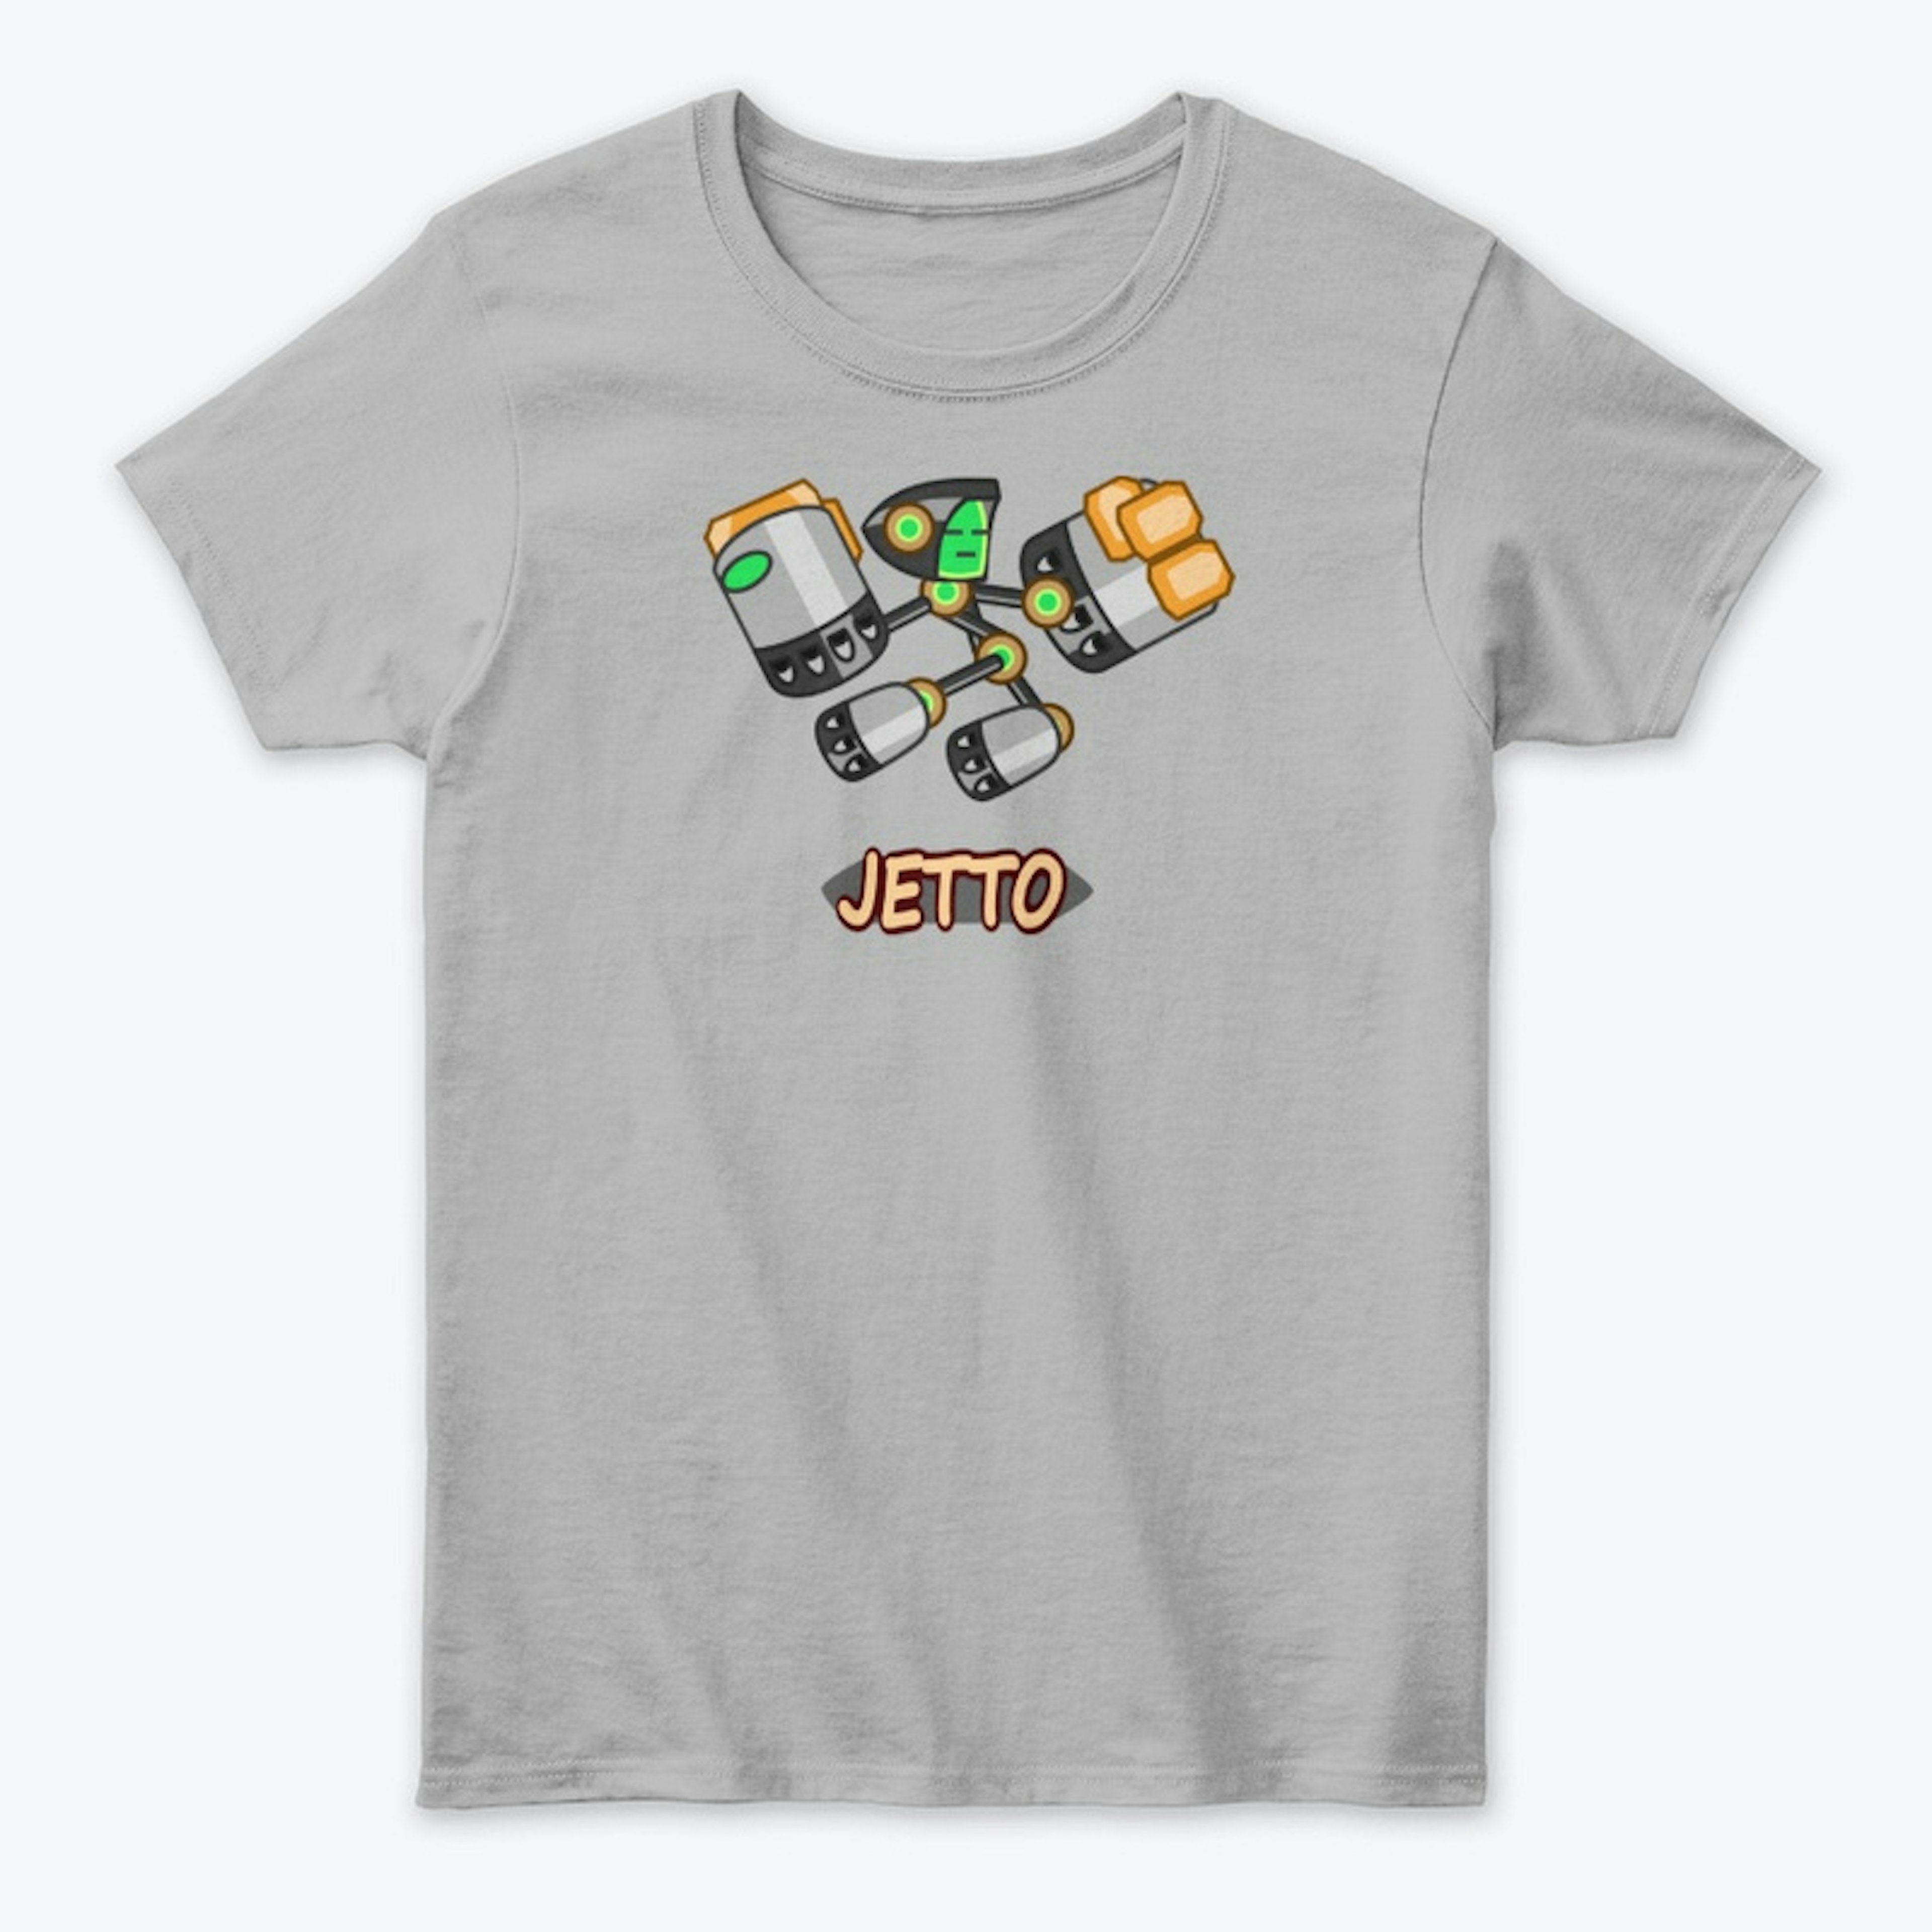 Jetto shirt + Logo on back